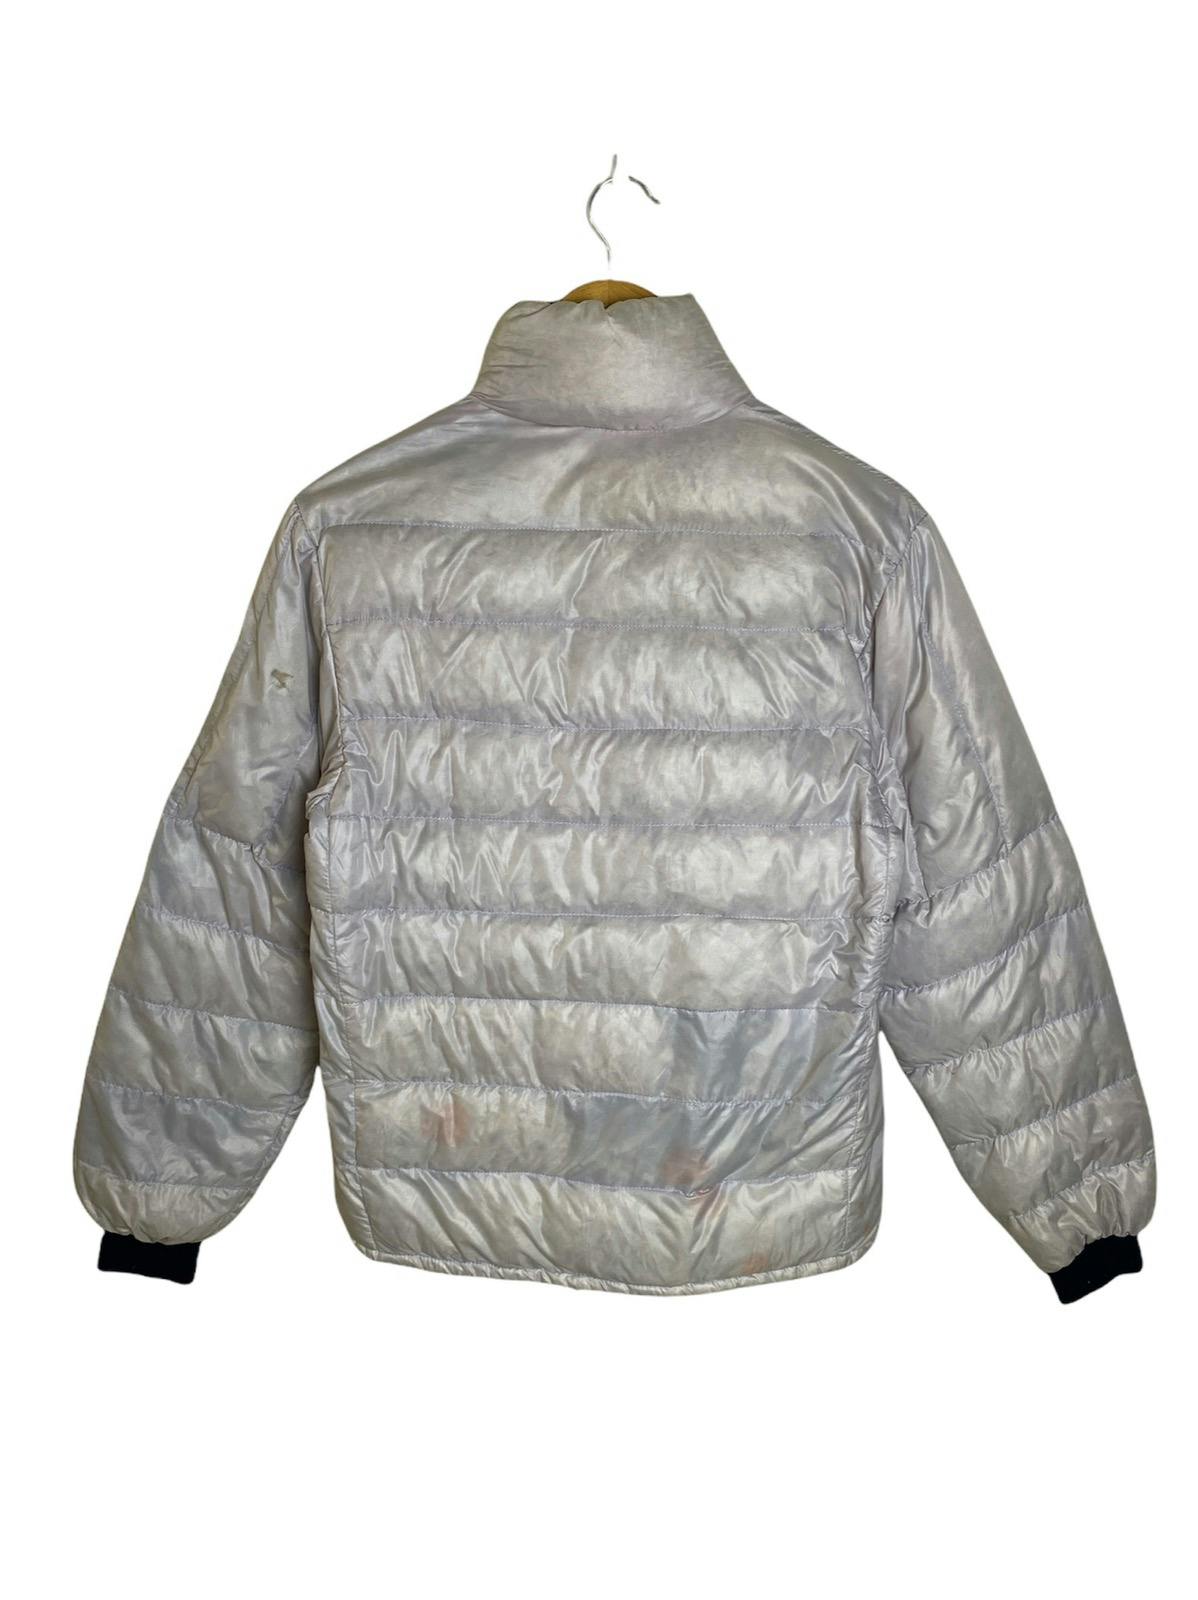 Vintage MONCLER Puffer Goose Down Winter Jacket - 10